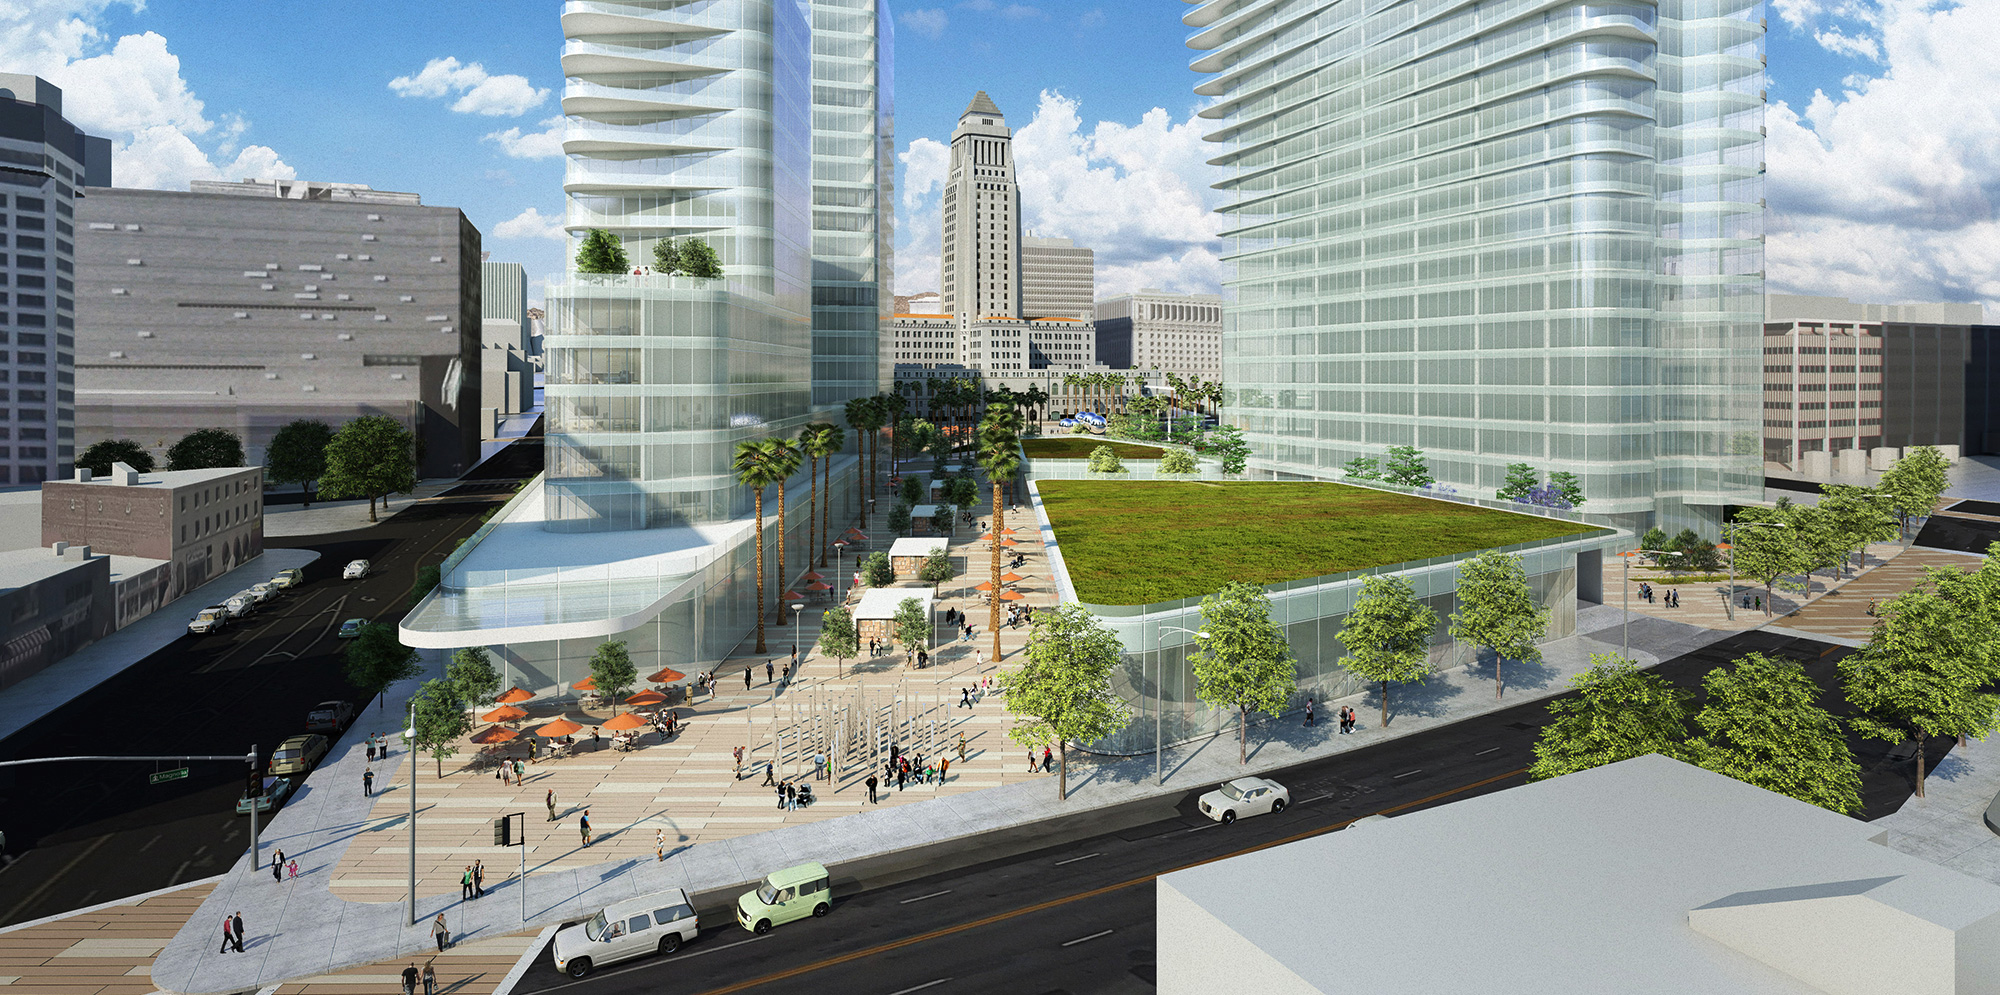 Los Angeles civic center master plan promenade